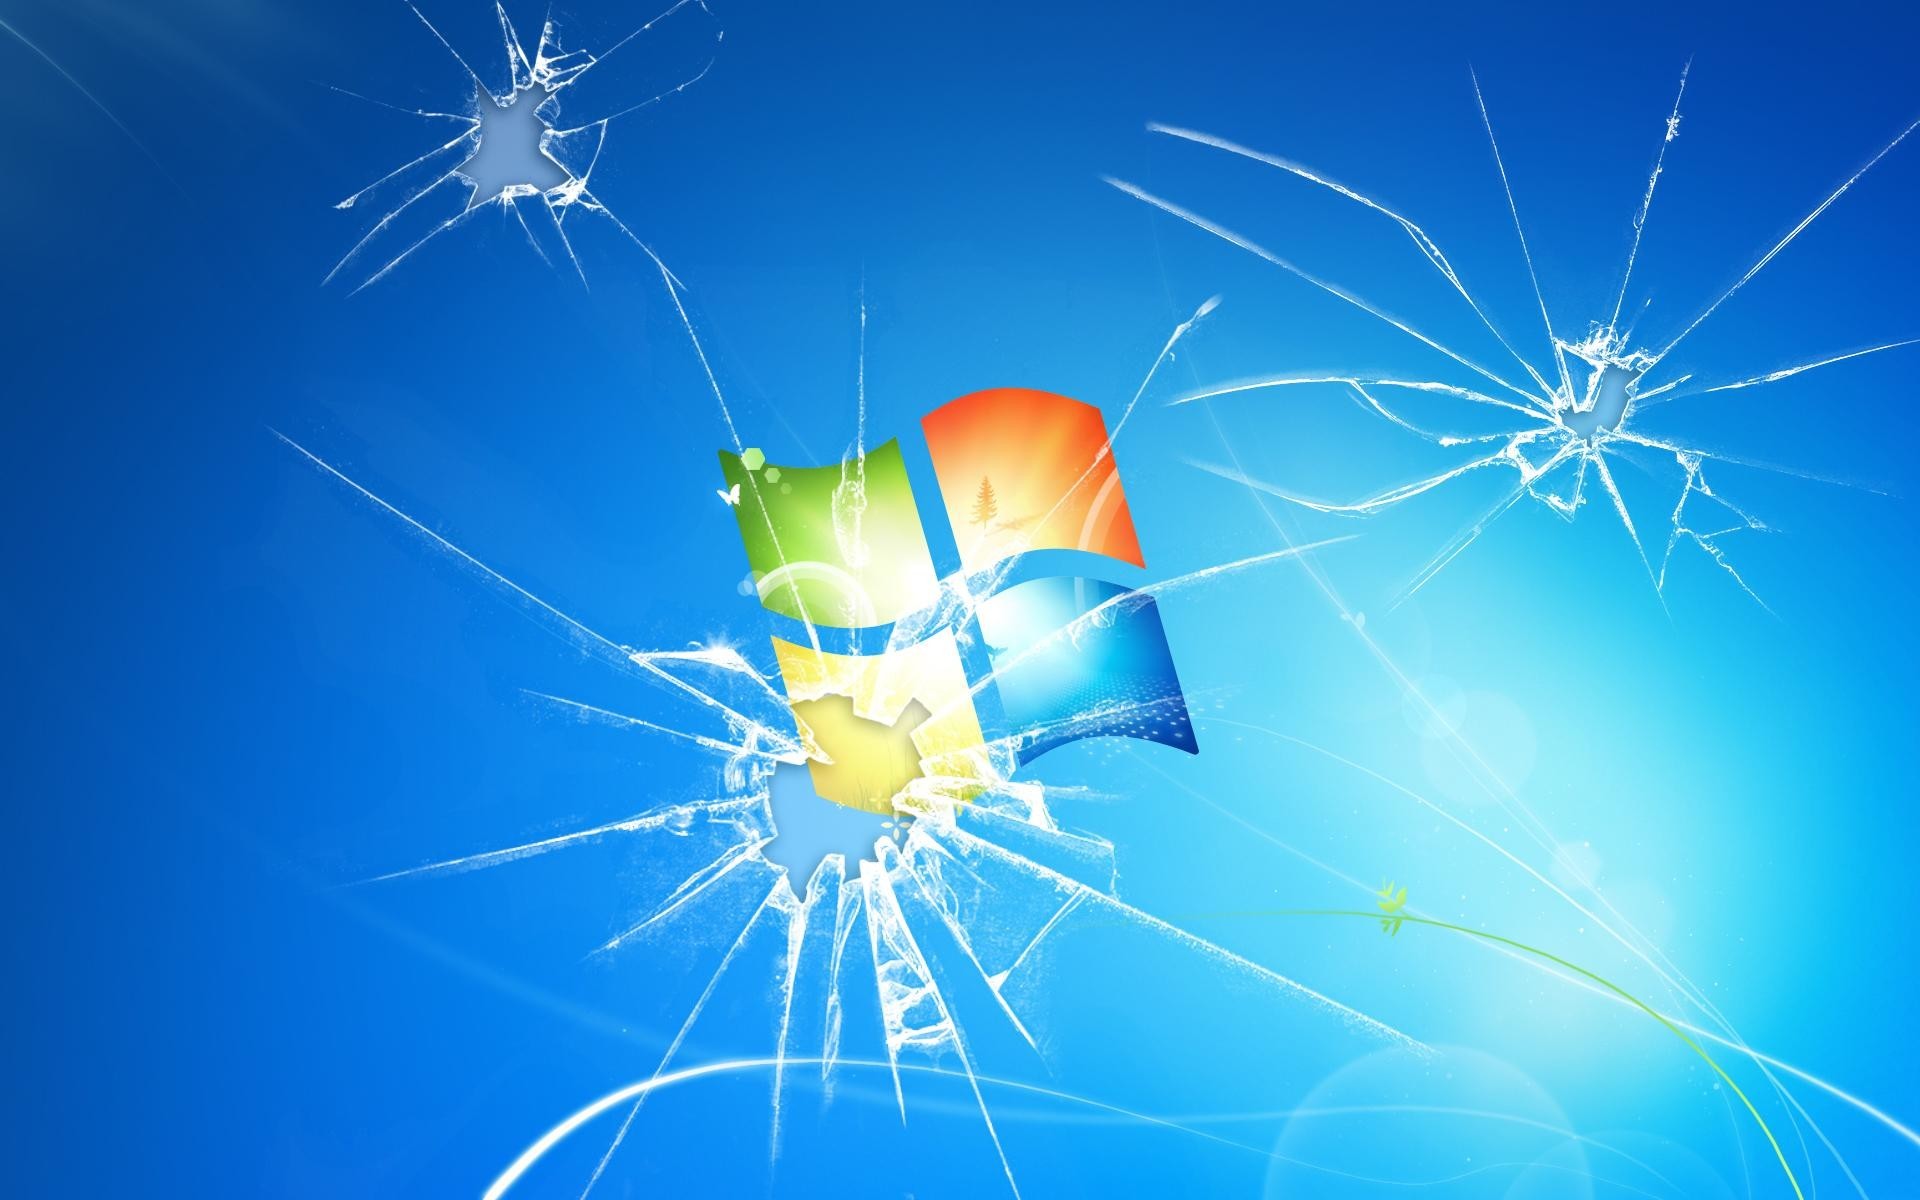 fixwin windows 7 cracked